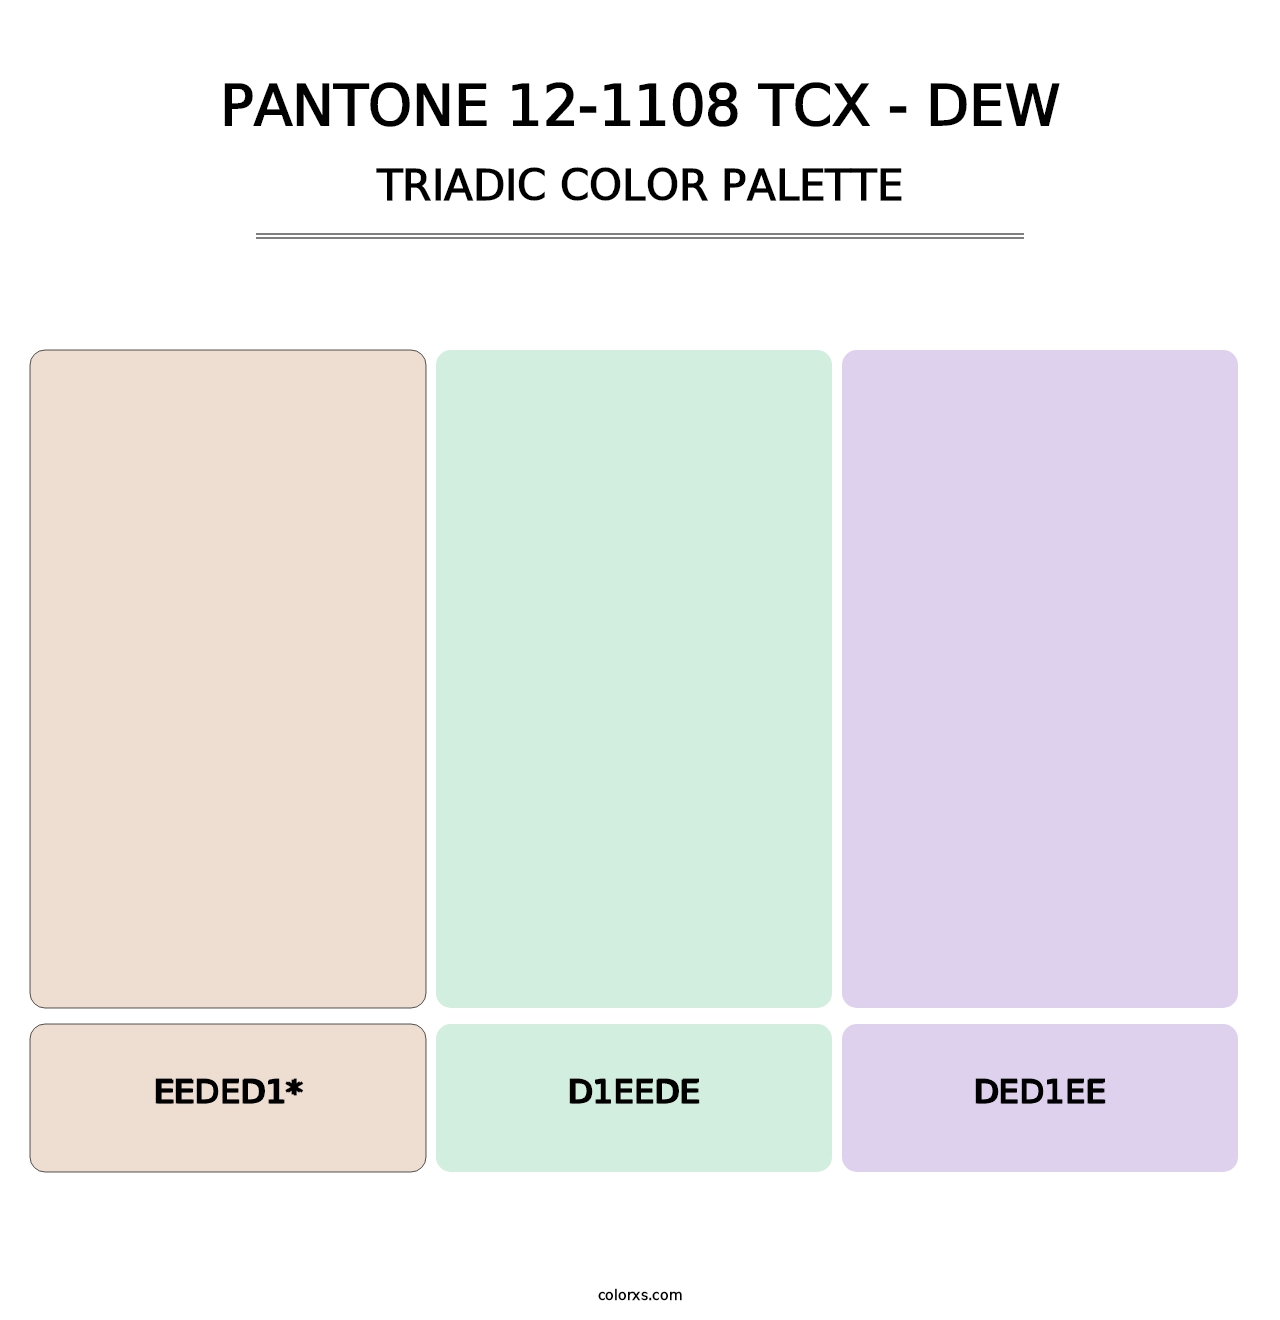 PANTONE 12-1108 TCX - Dew - Triadic Color Palette